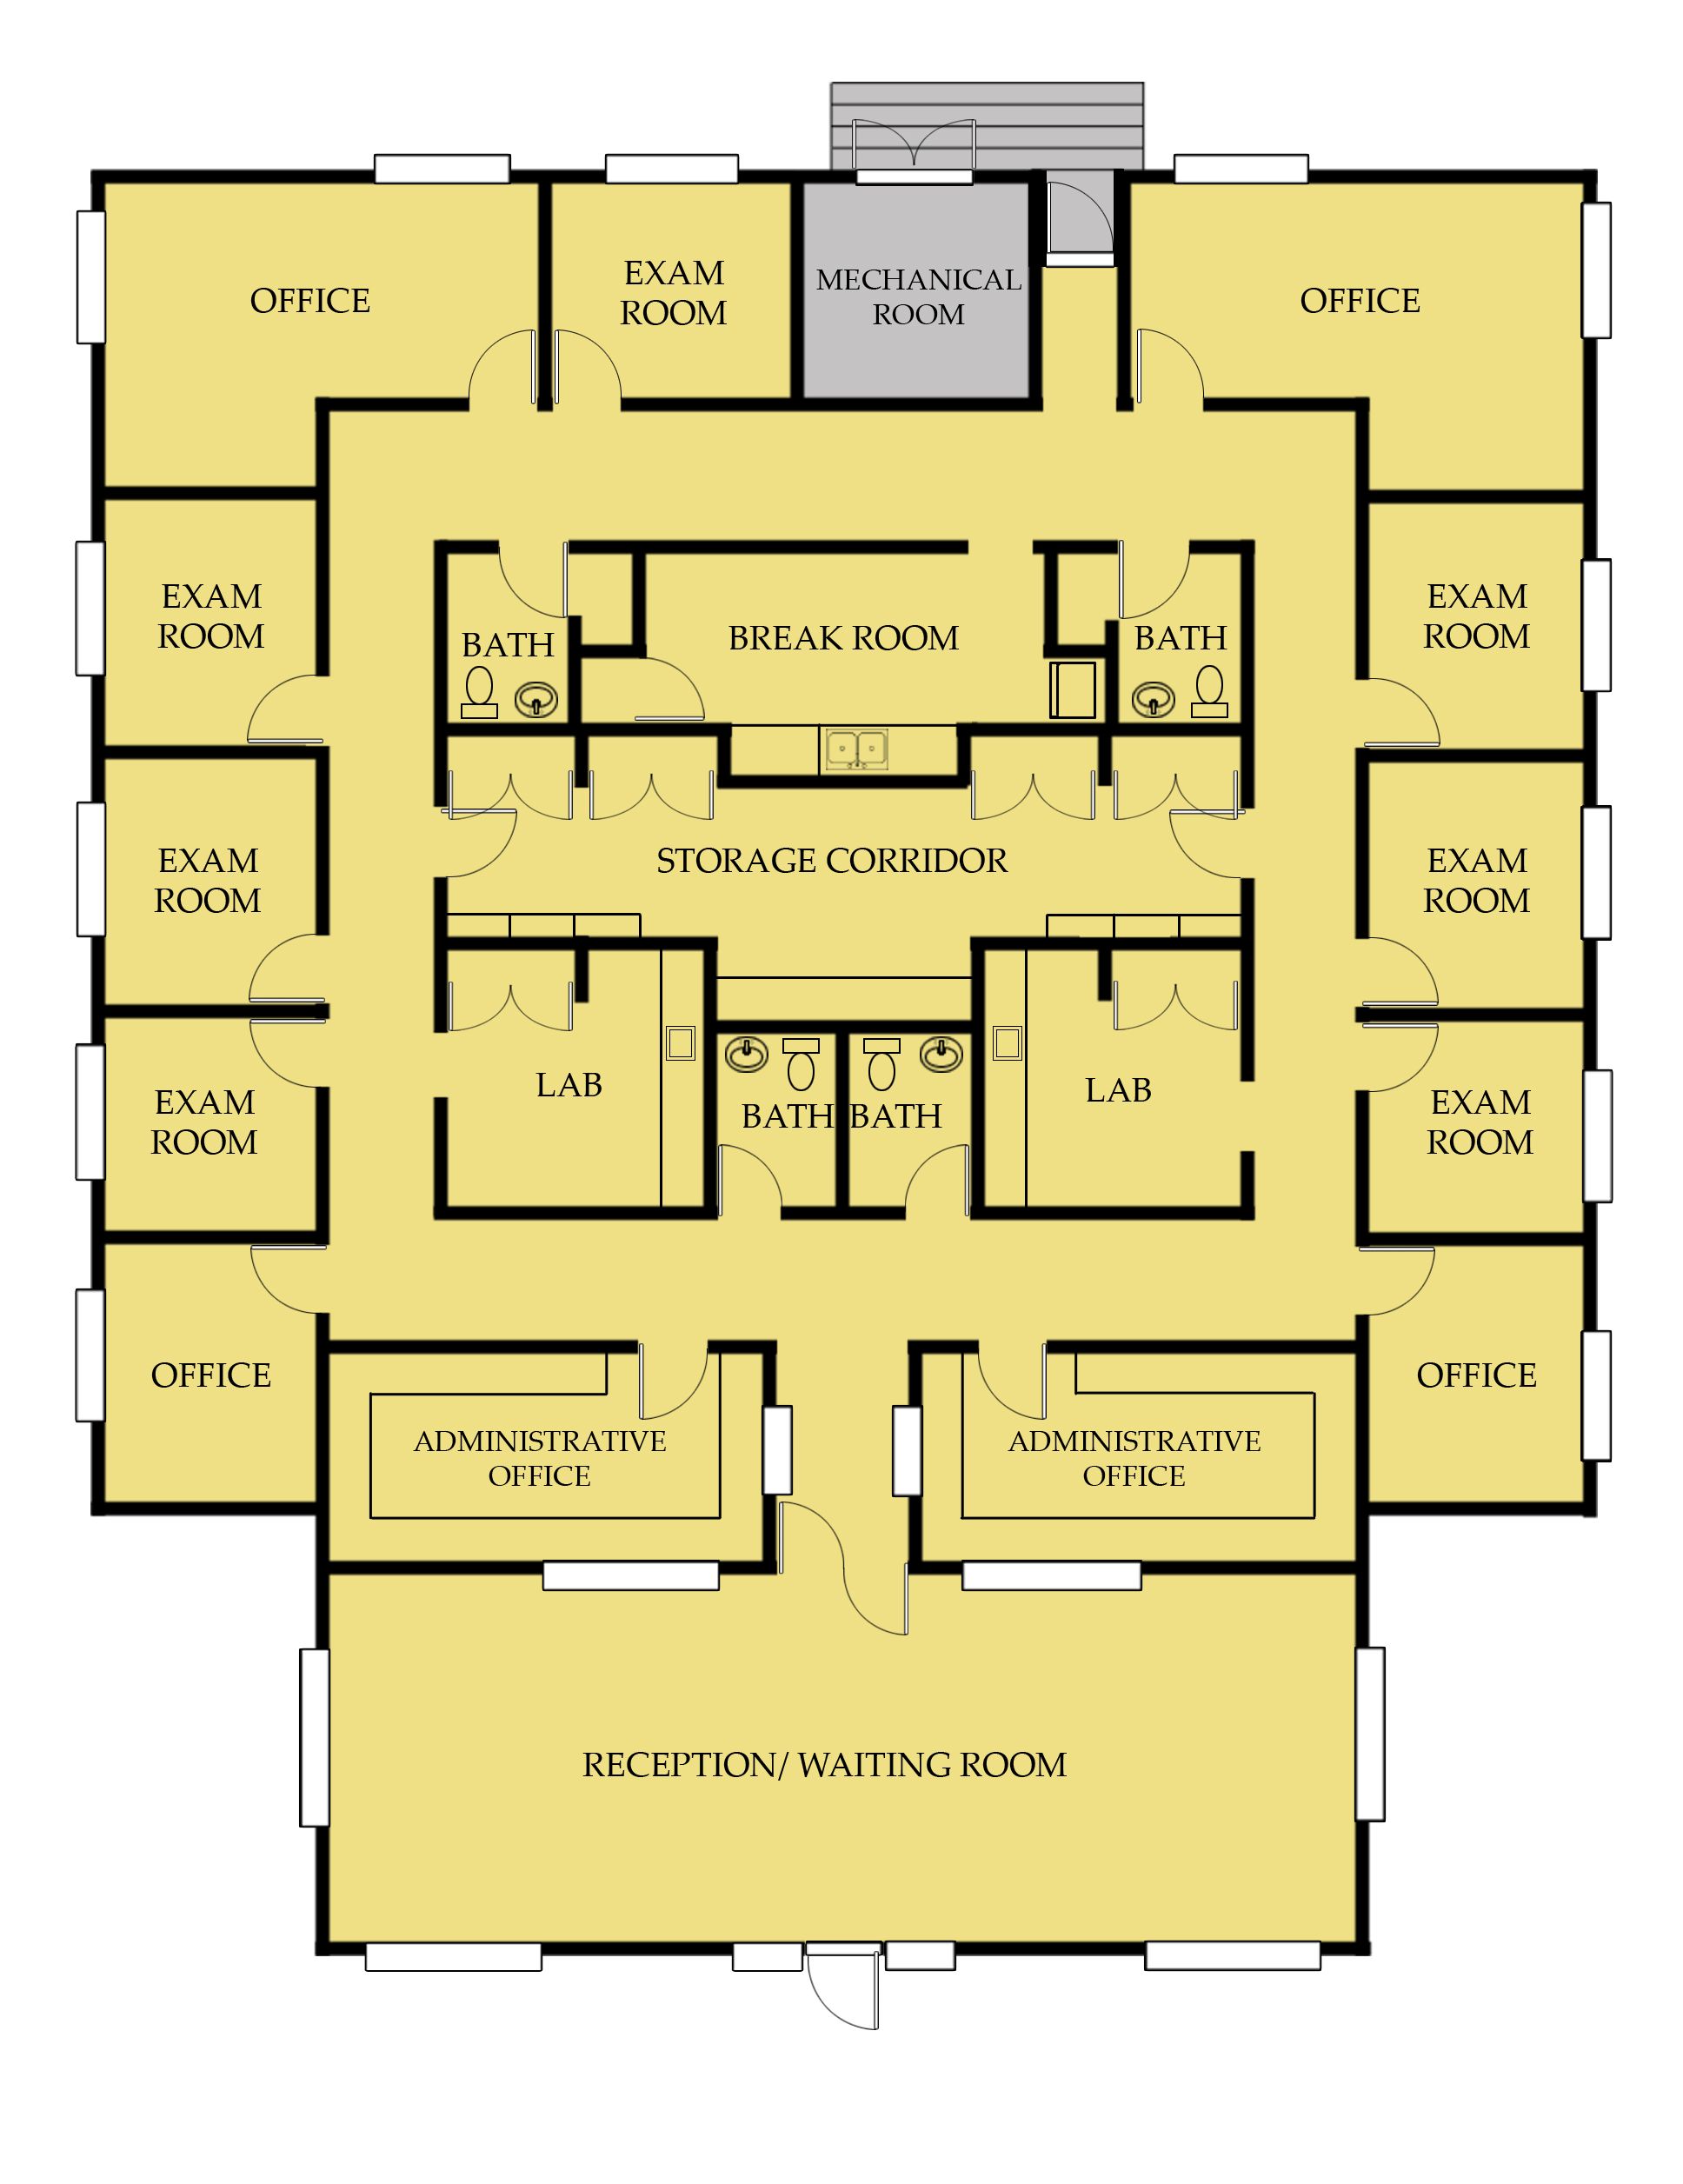 Medical Office Building Floor Plans Office floor plan